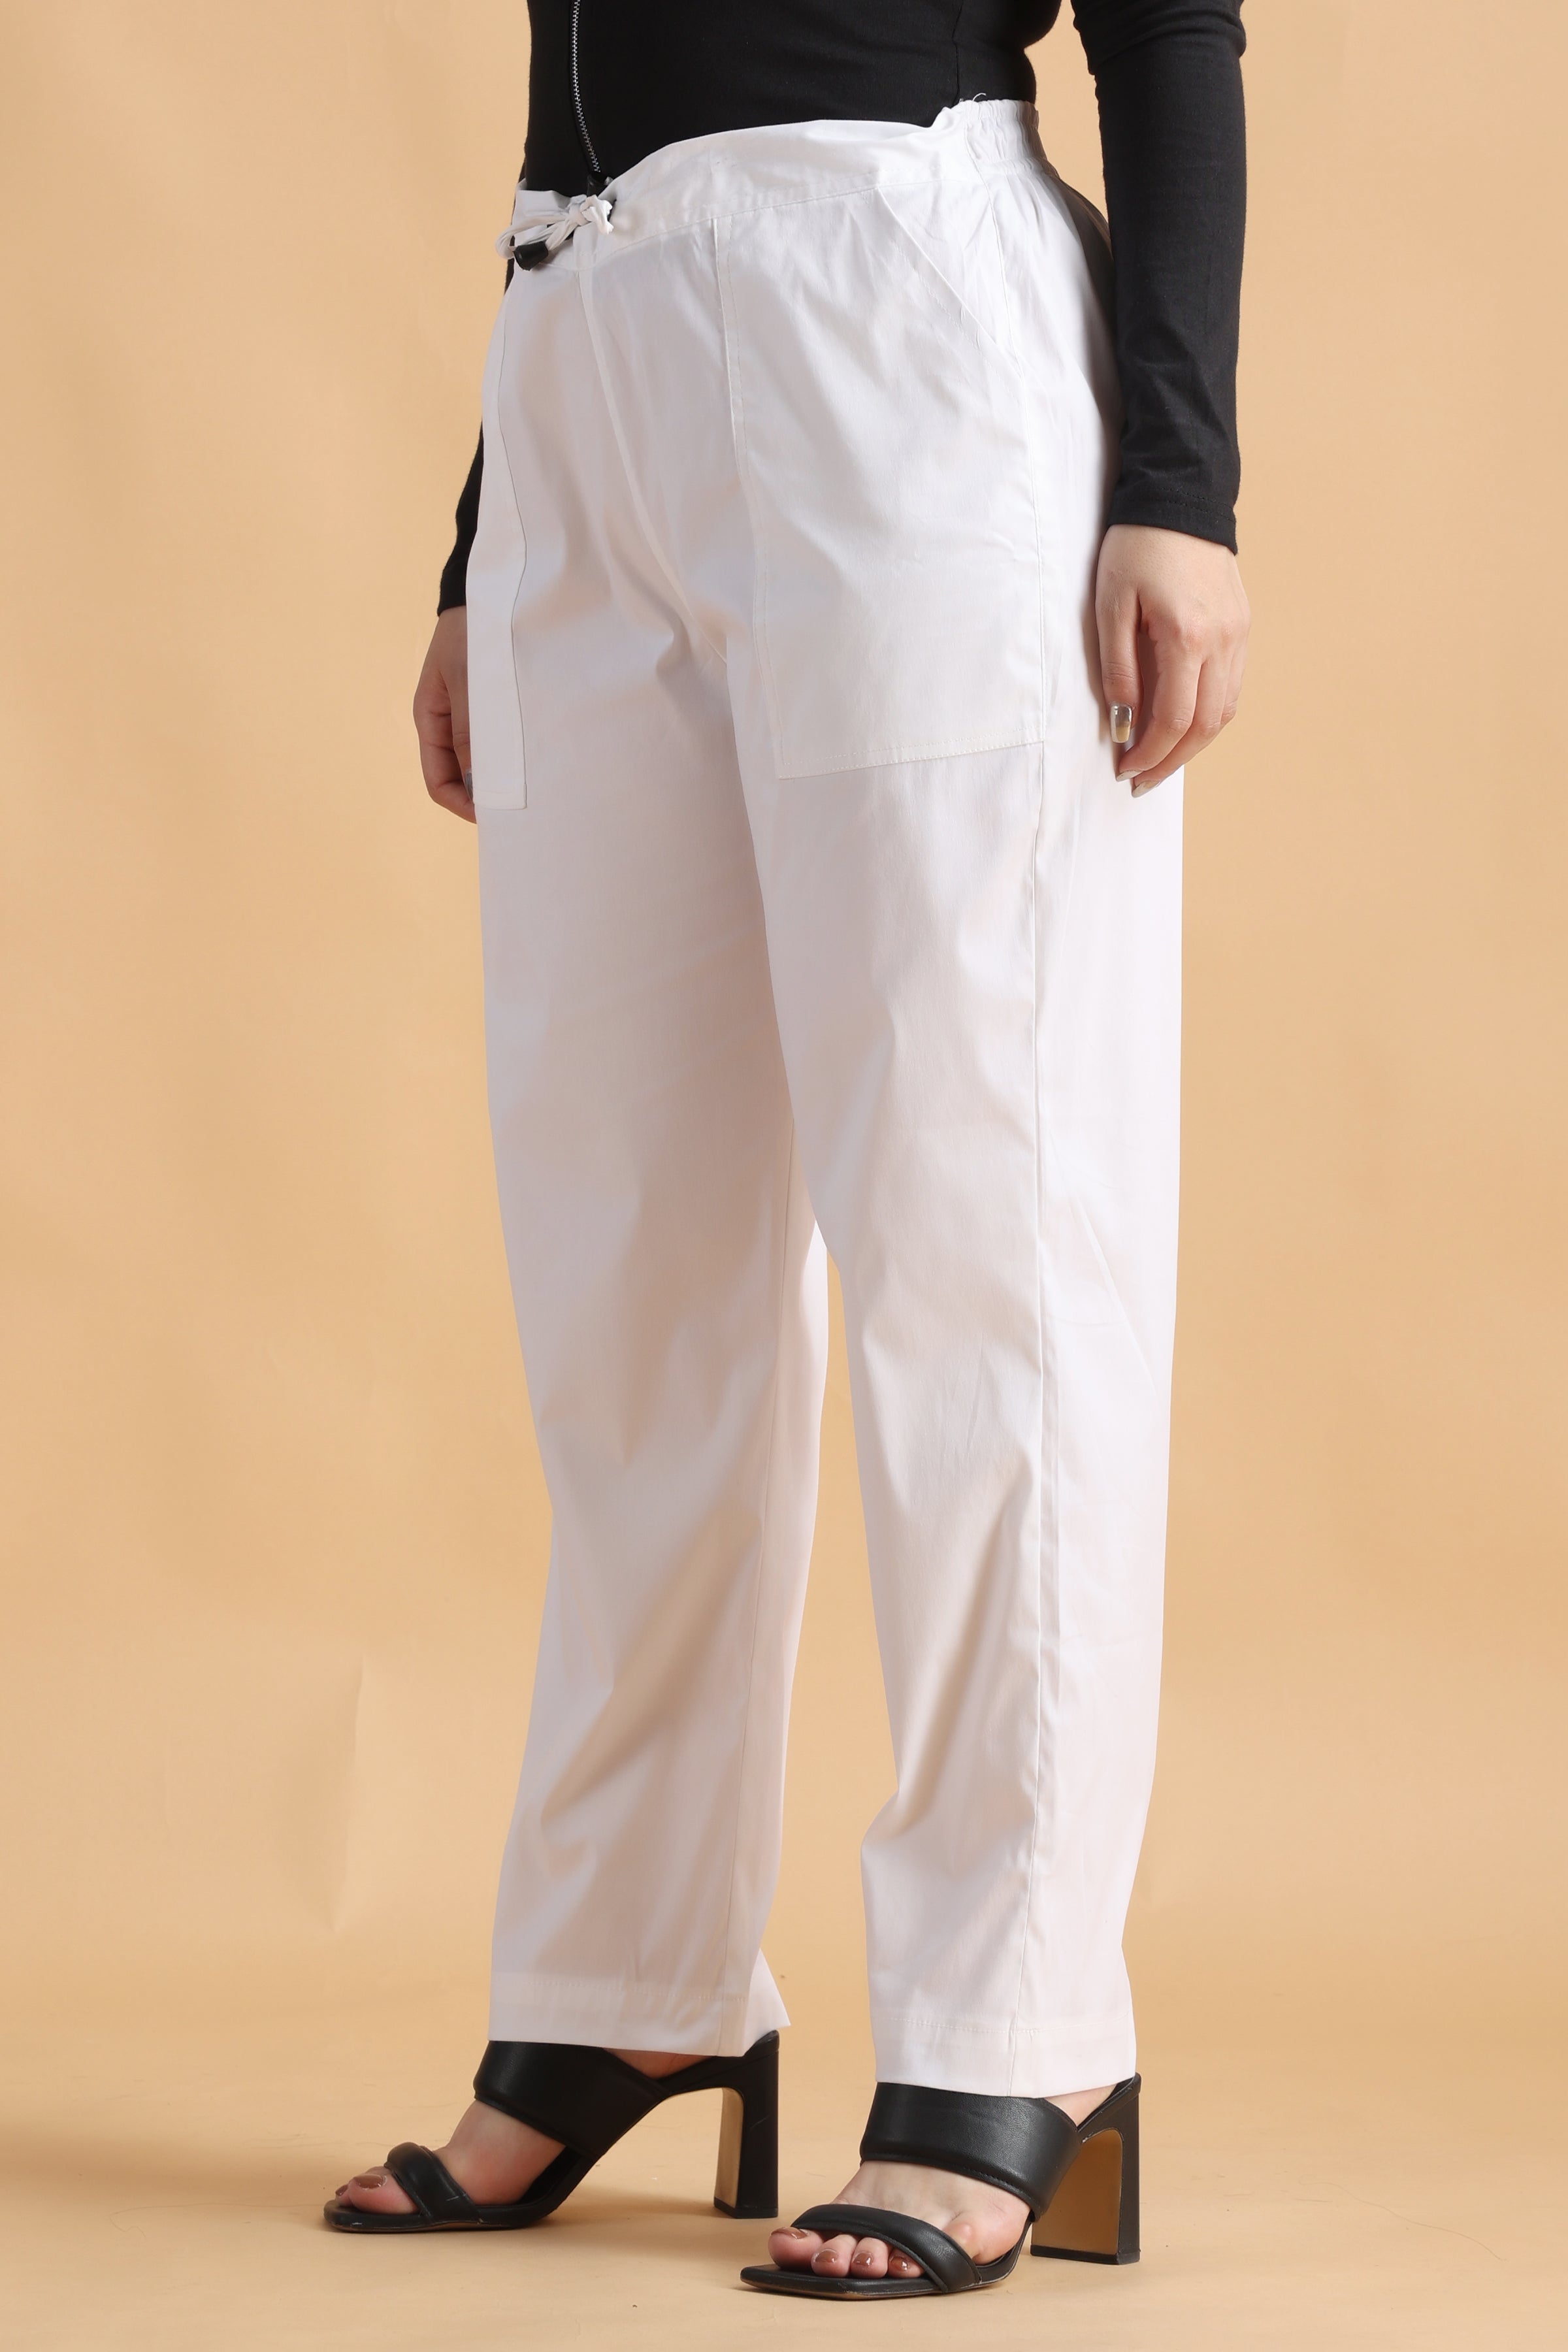 Buy best Green cotton linen Pants designs for ladies  Priya Chaudhary